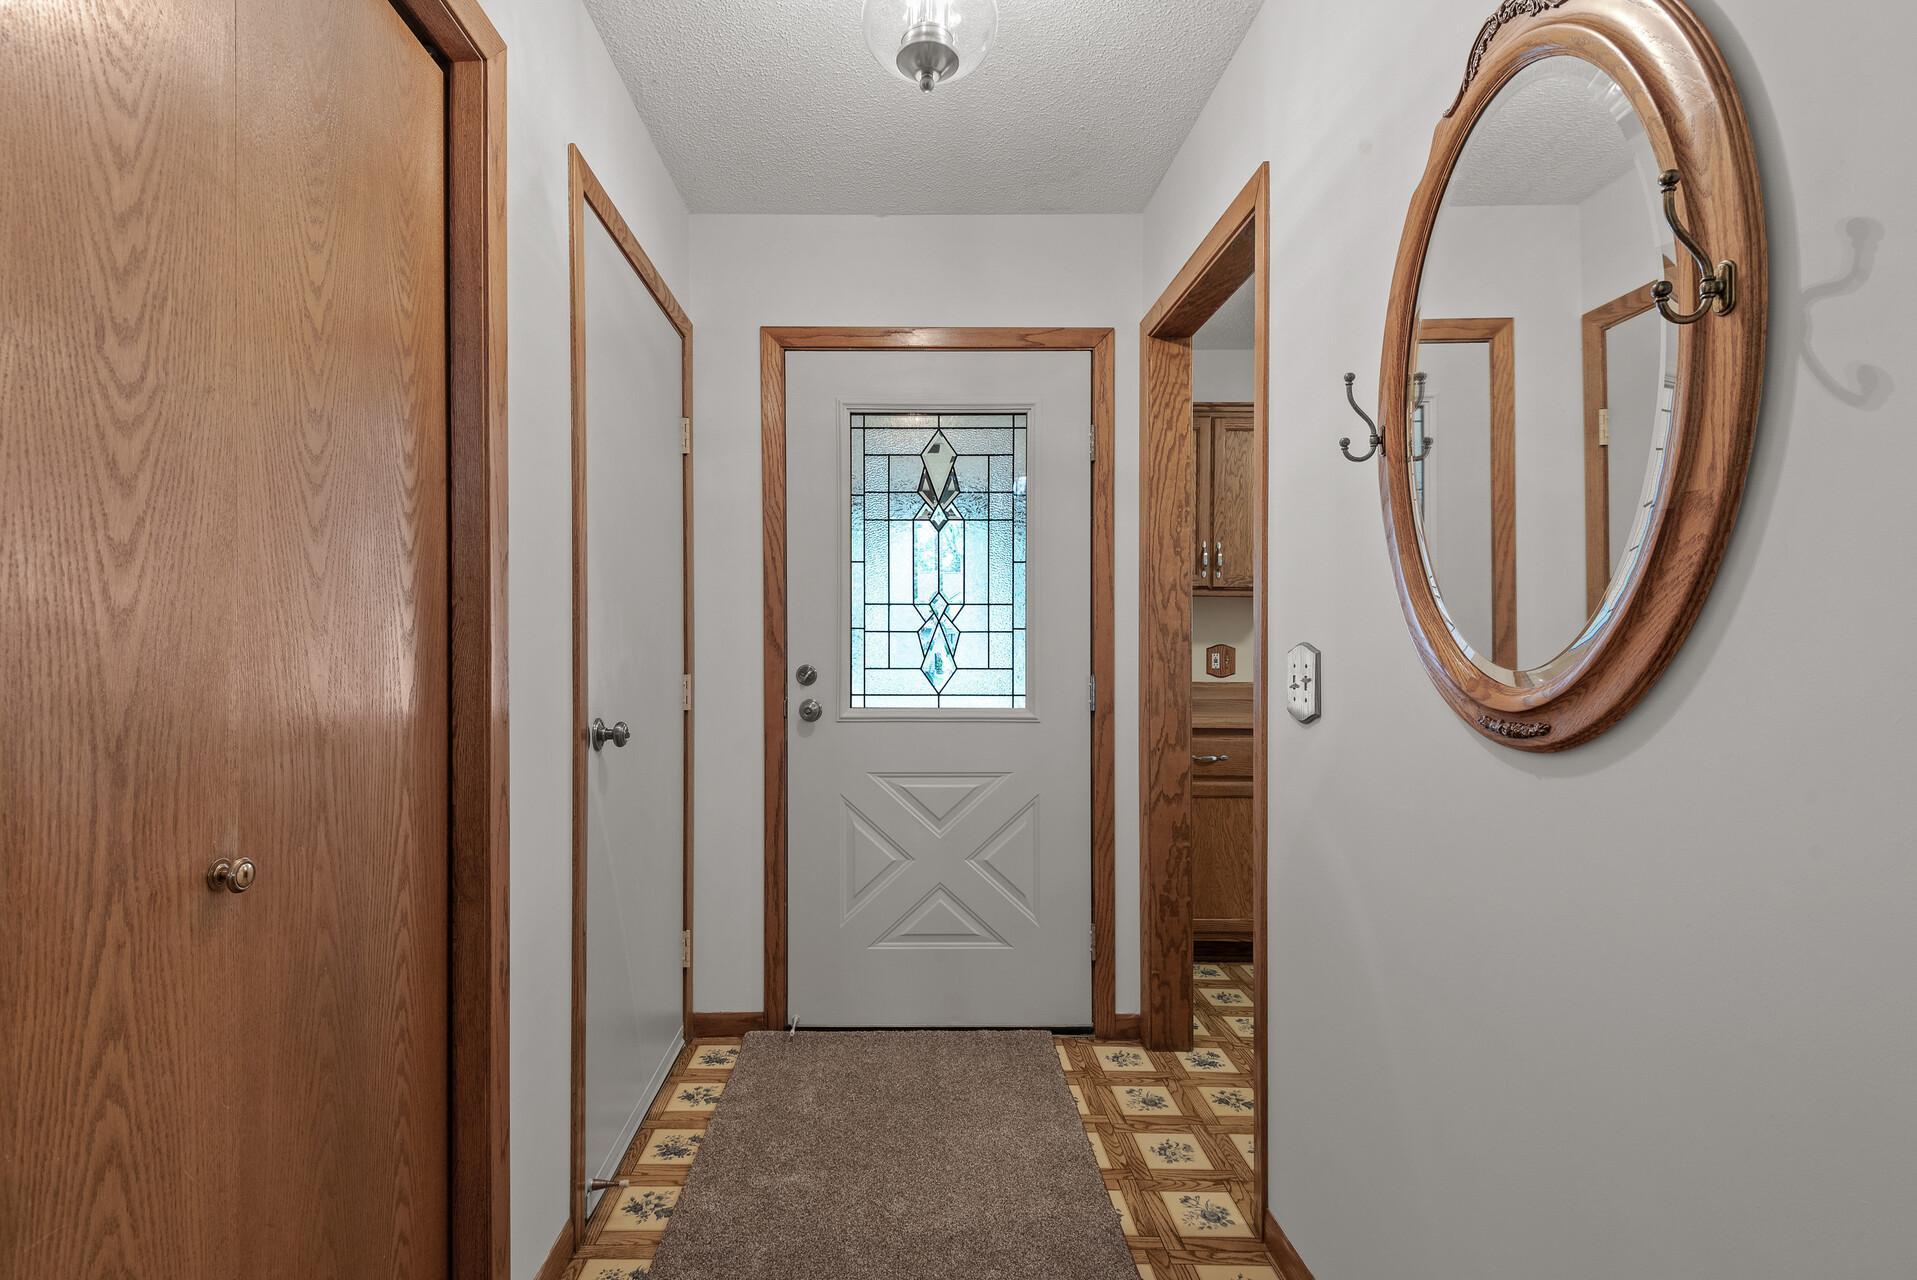 Entry way leads to kitchen, garage door and coat closet